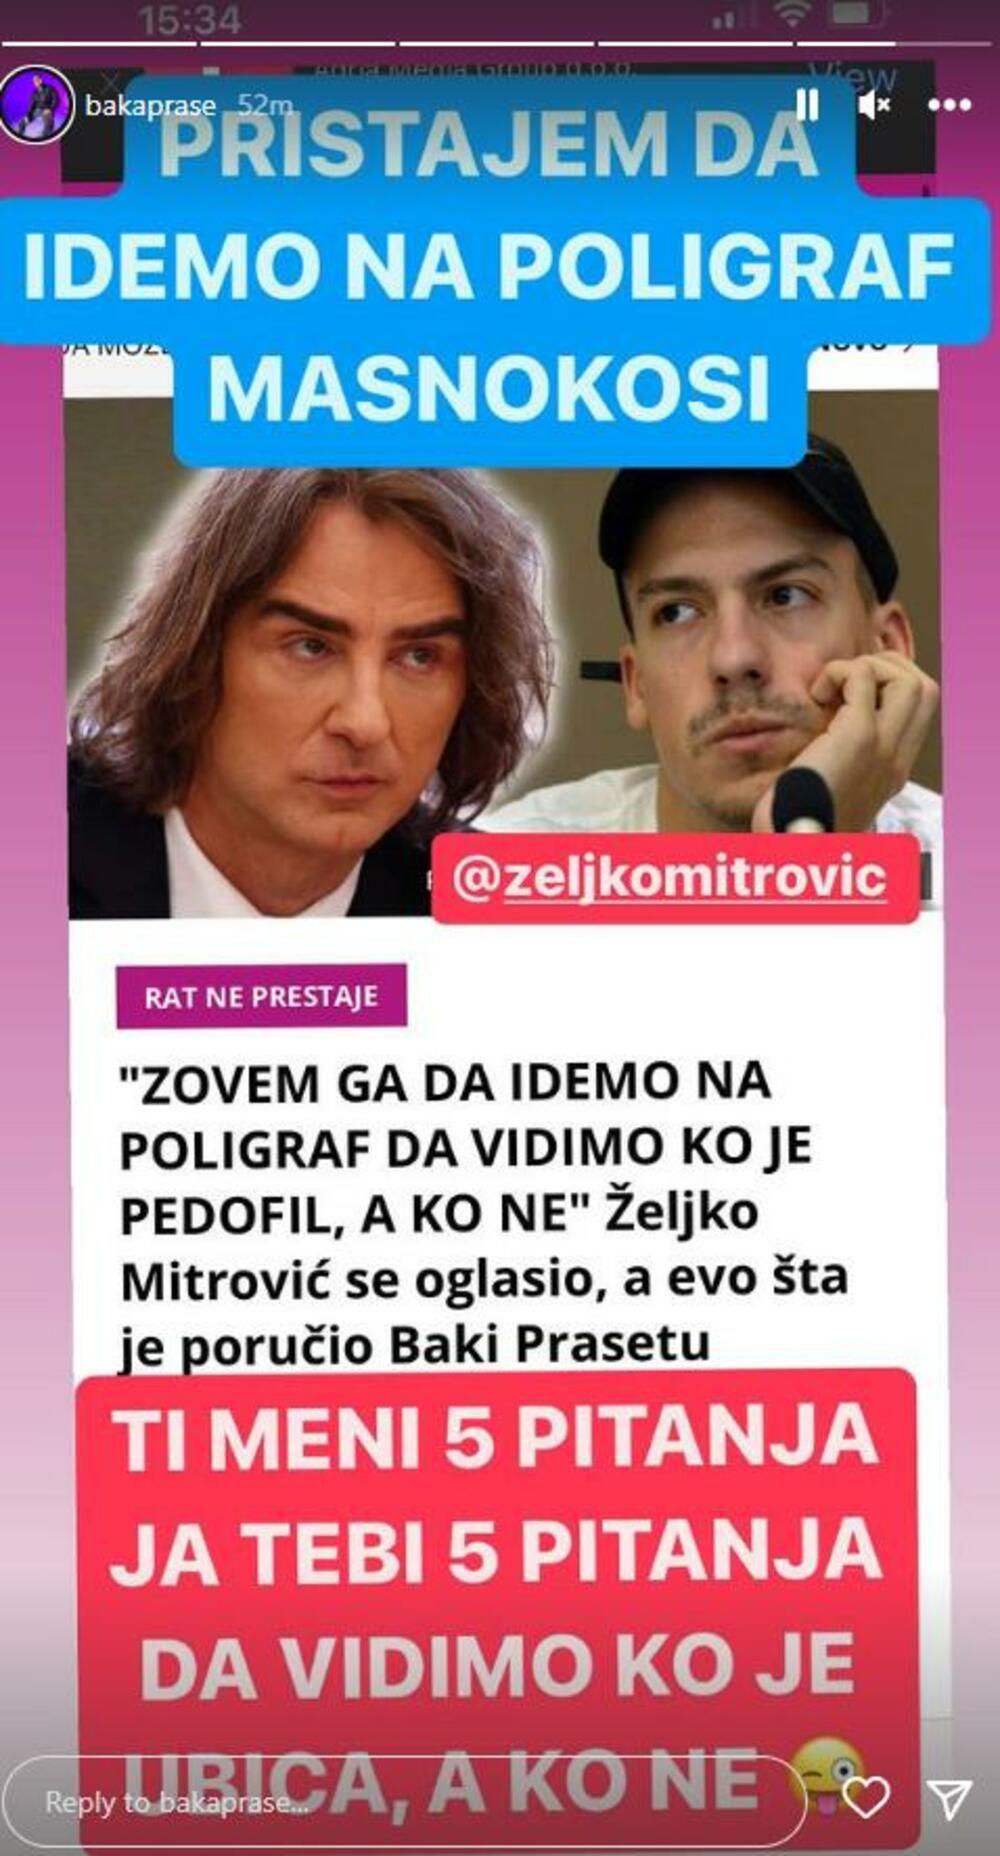 Željko Mitrović, Baka Prase